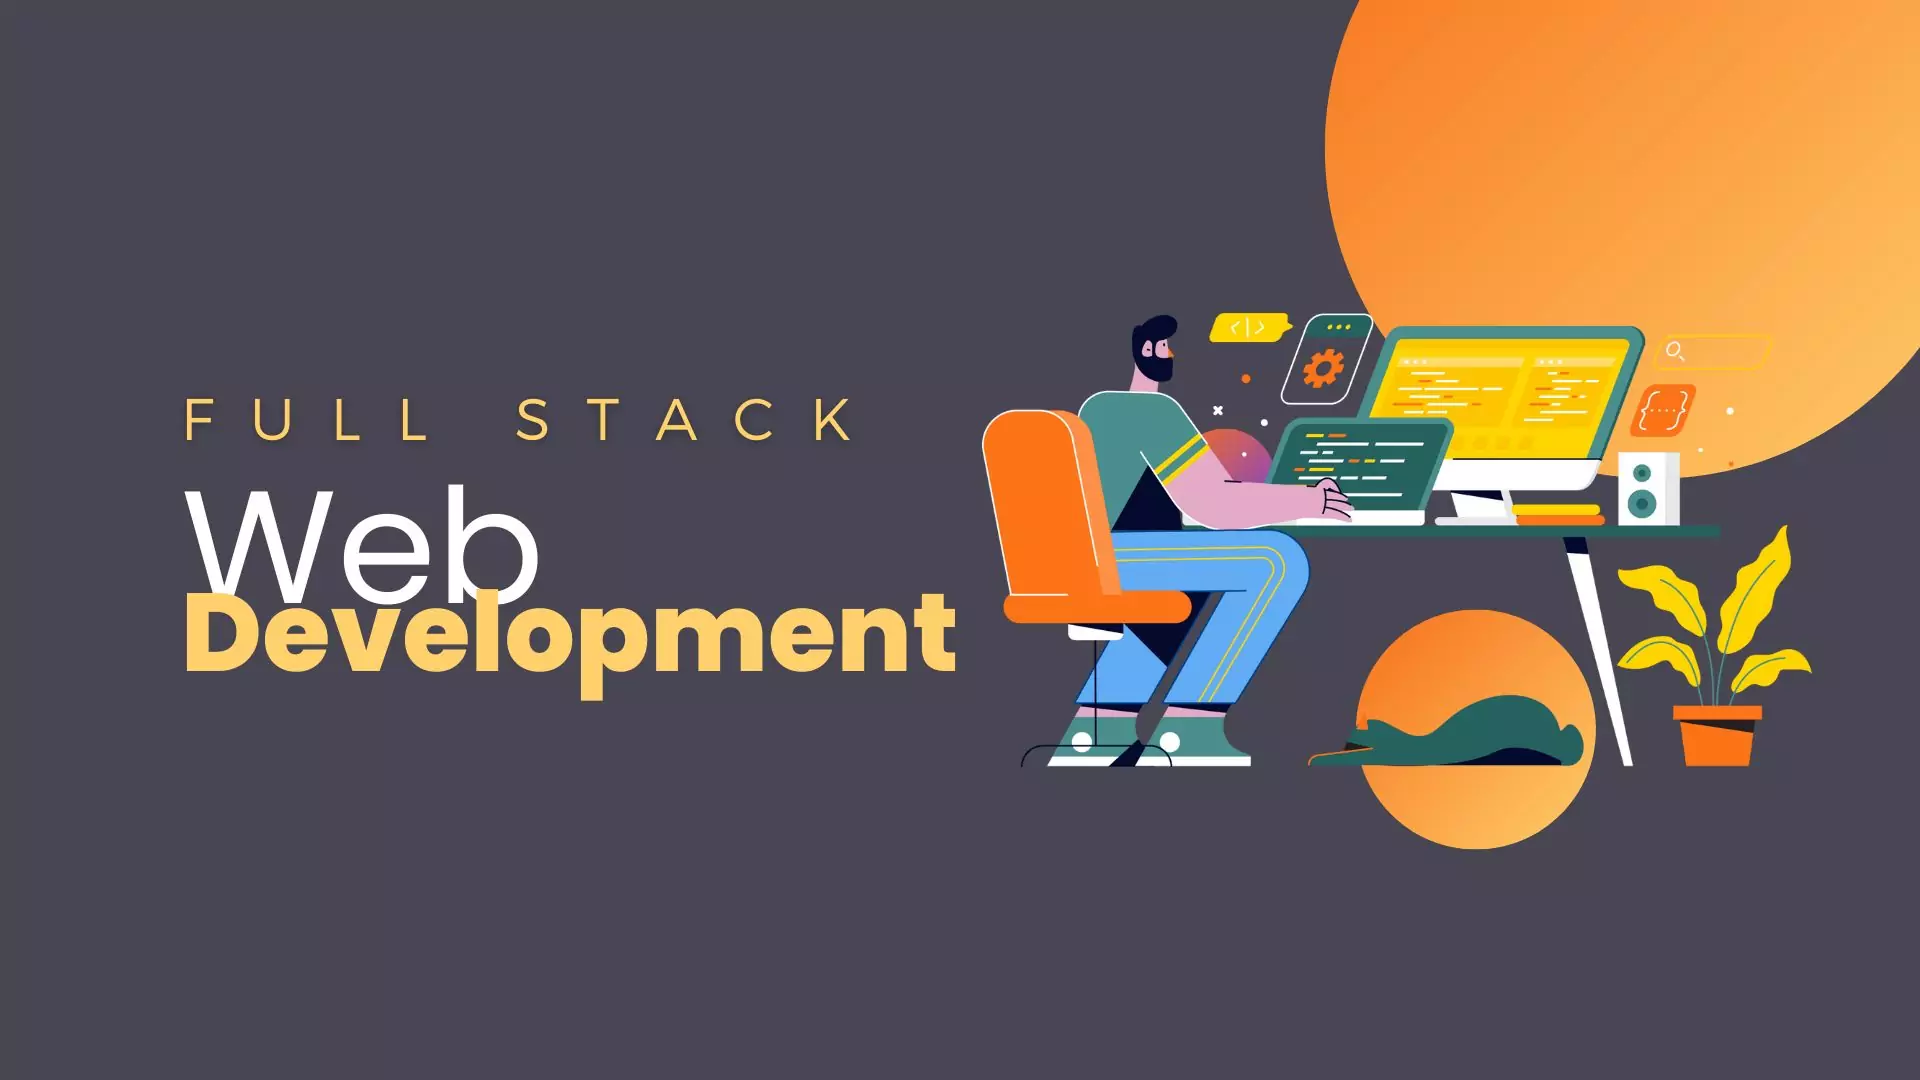 Full Stack Web Development Service